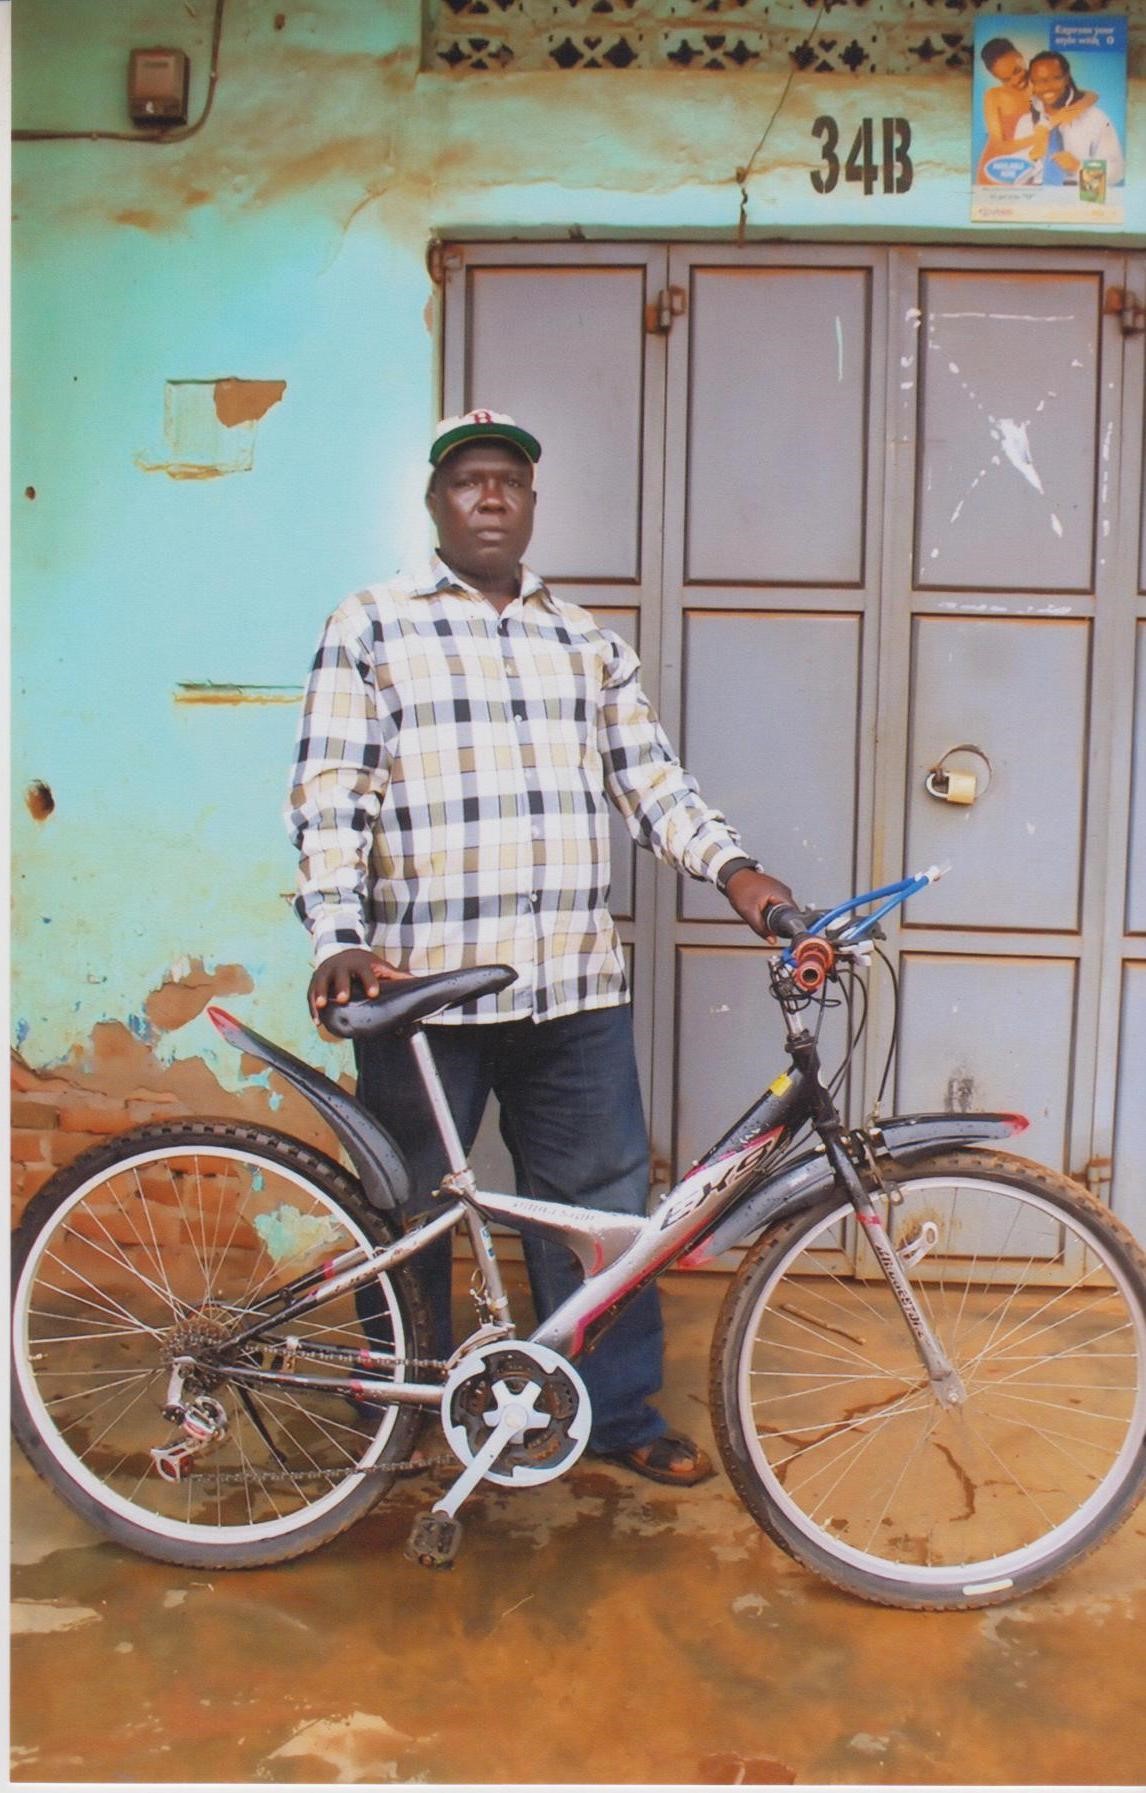 Mivule Moses' bicycle